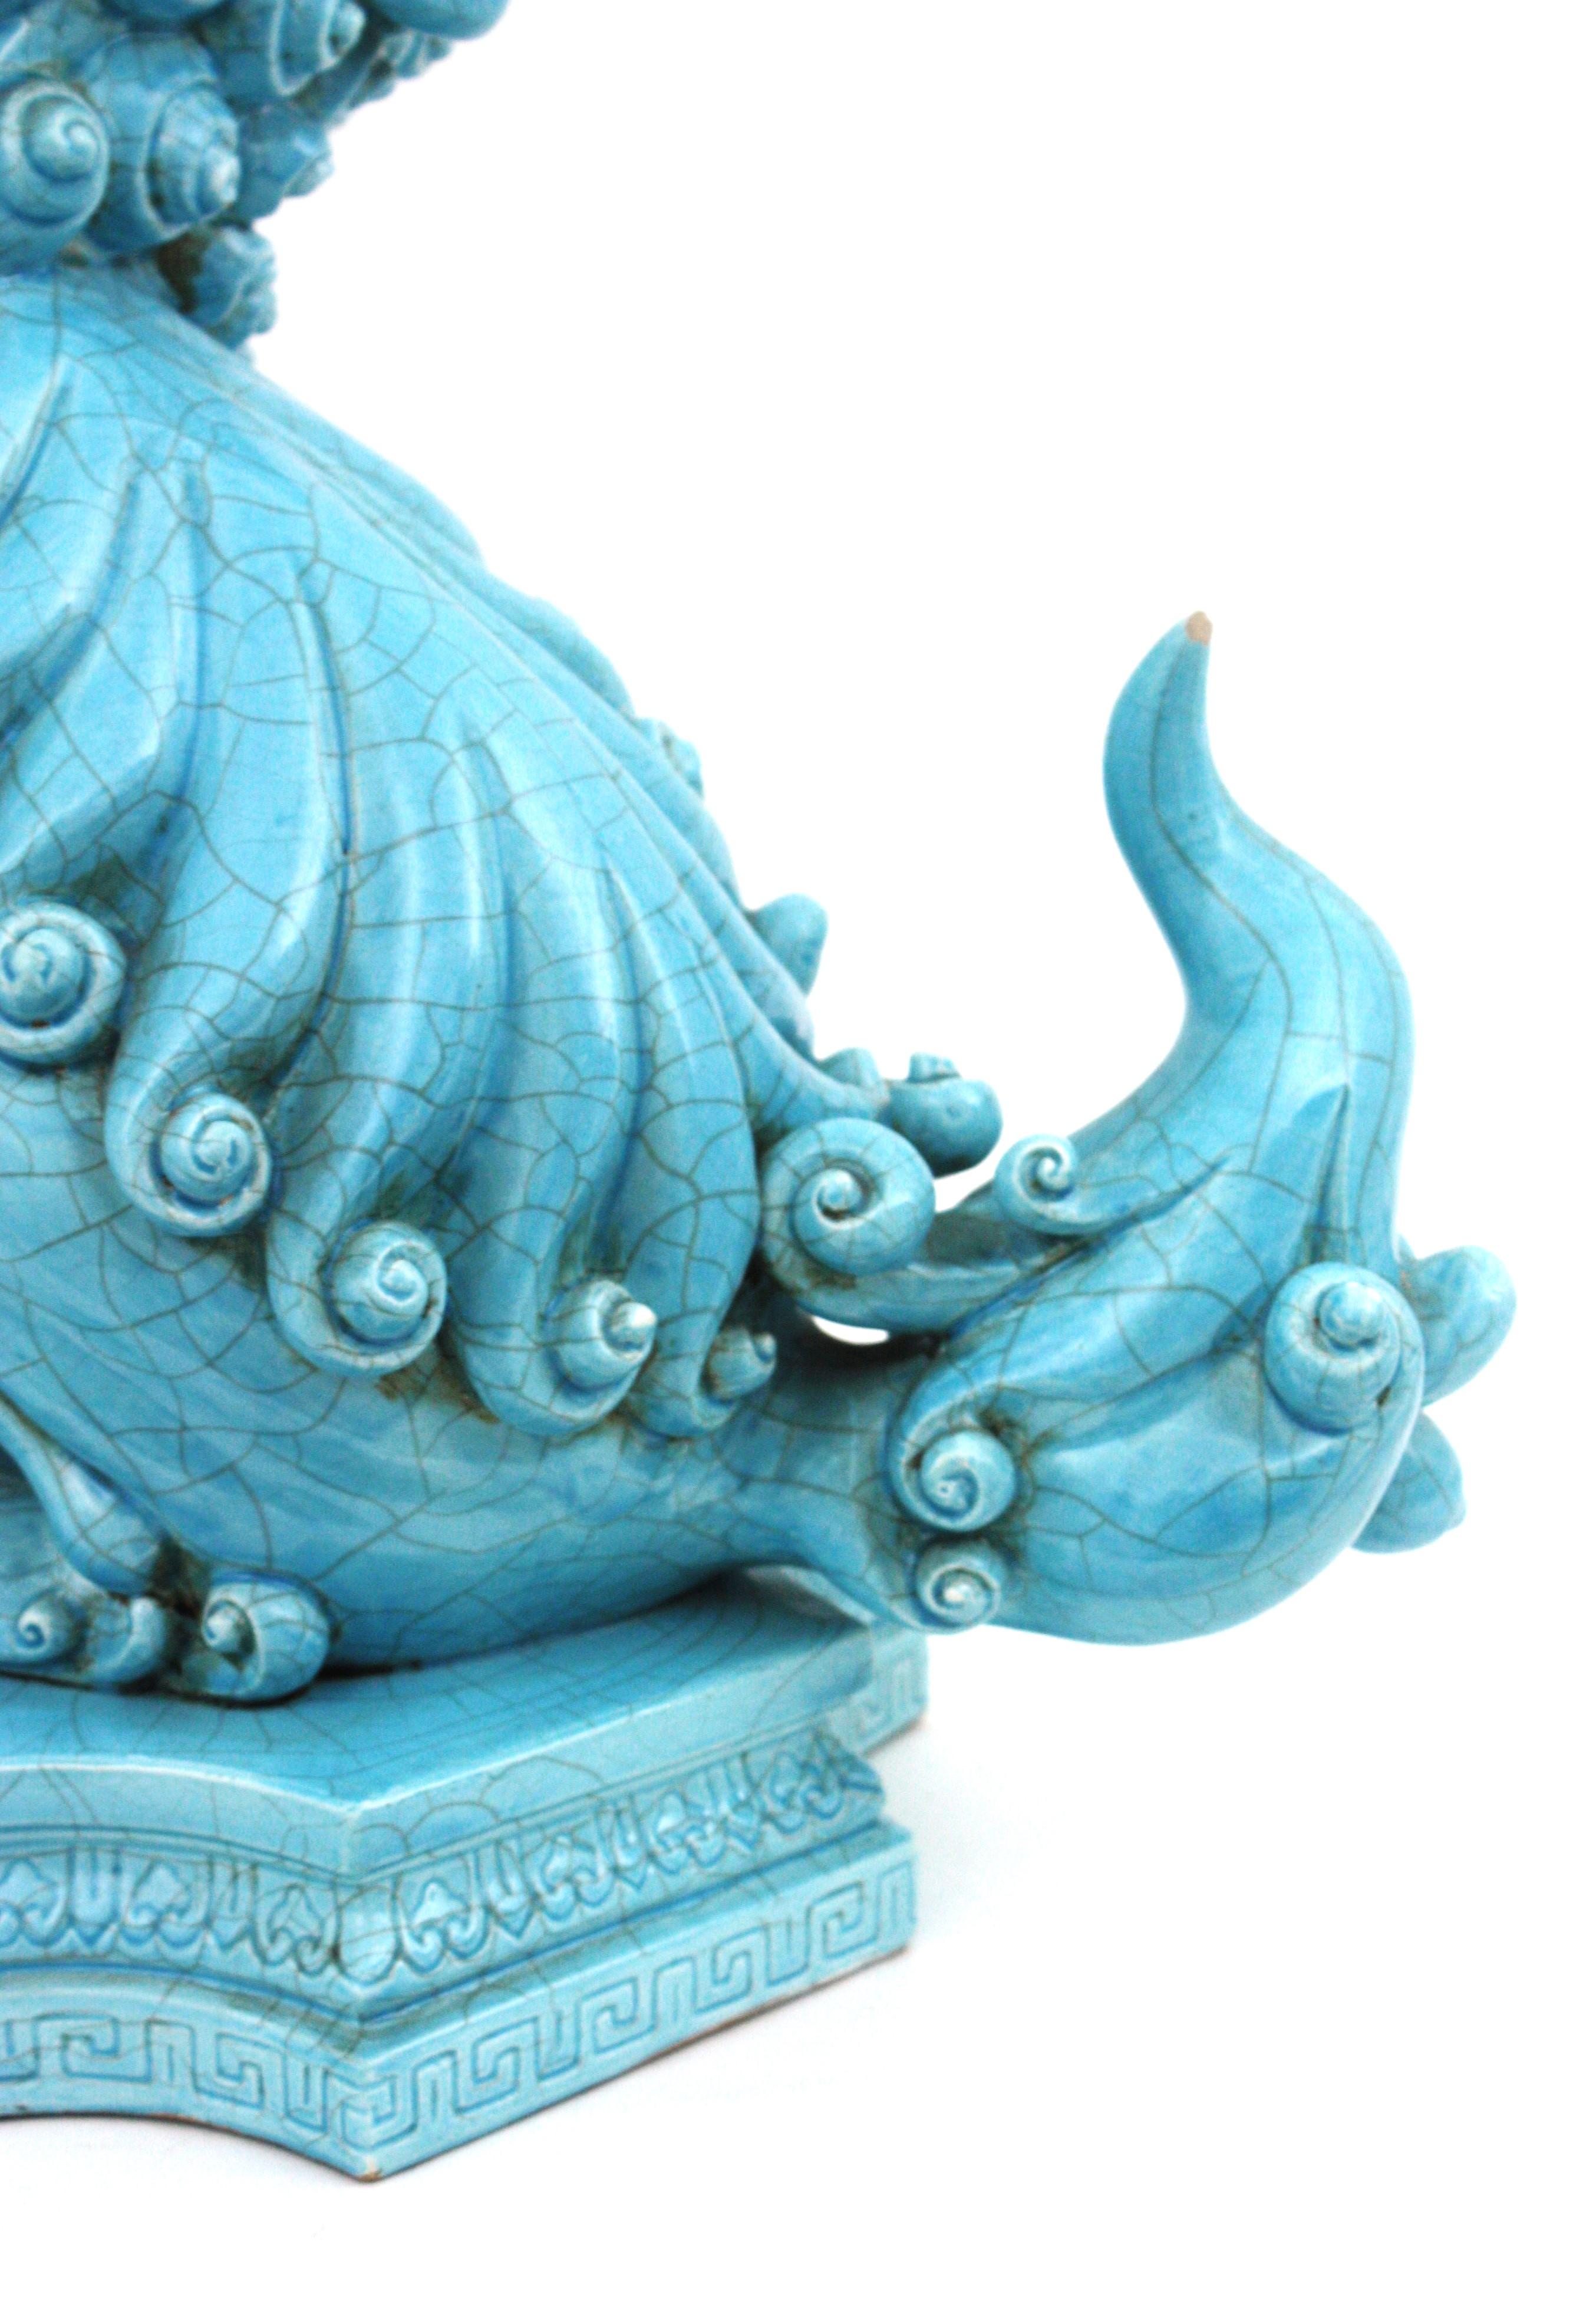 Large Foo Dog Guardian Lion Blue Porcelain Sculpture For Sale 4